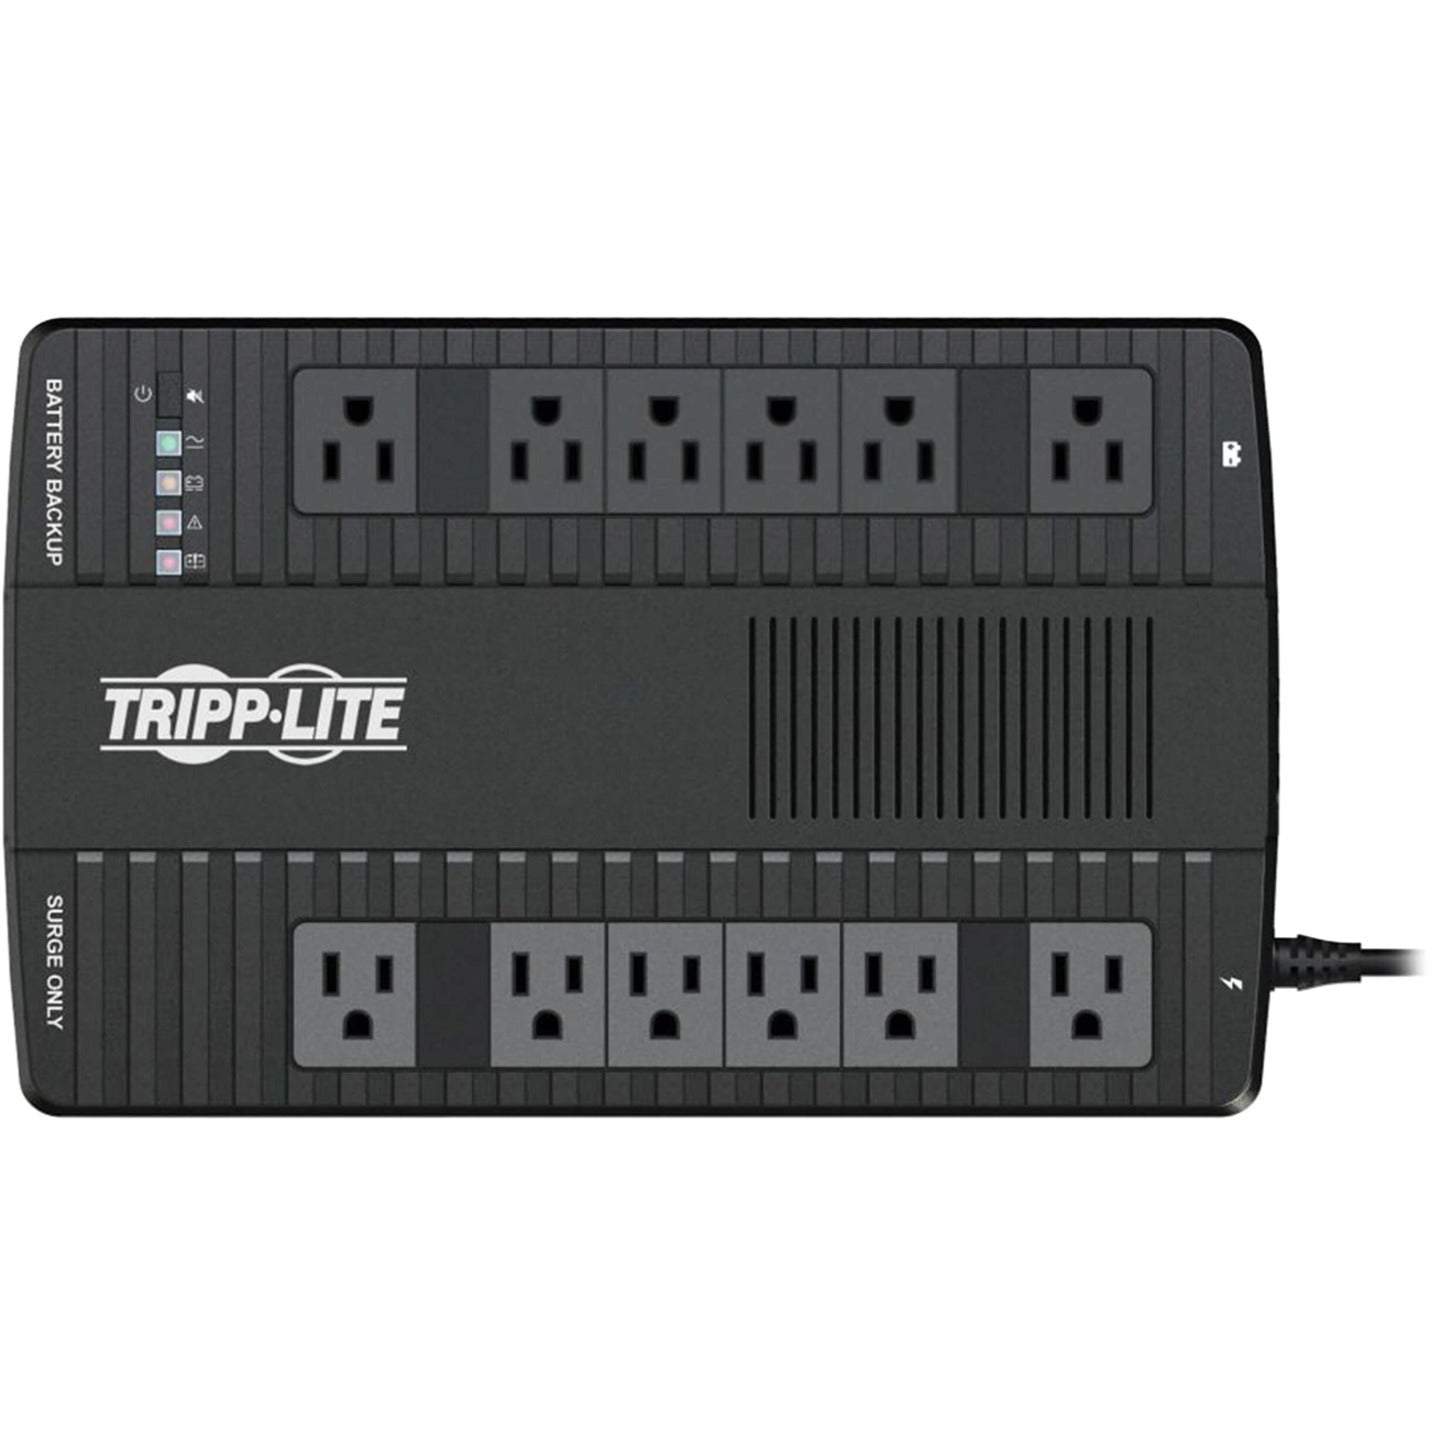 Tripp Lite OMNISMART1050MX OmniSmart 1050VA Ultra-compact Desktop/Tower/Wall Mount UPS, Pure Sine Wave, 1050 VA/540 W, USB Port, 2 Year Warranty